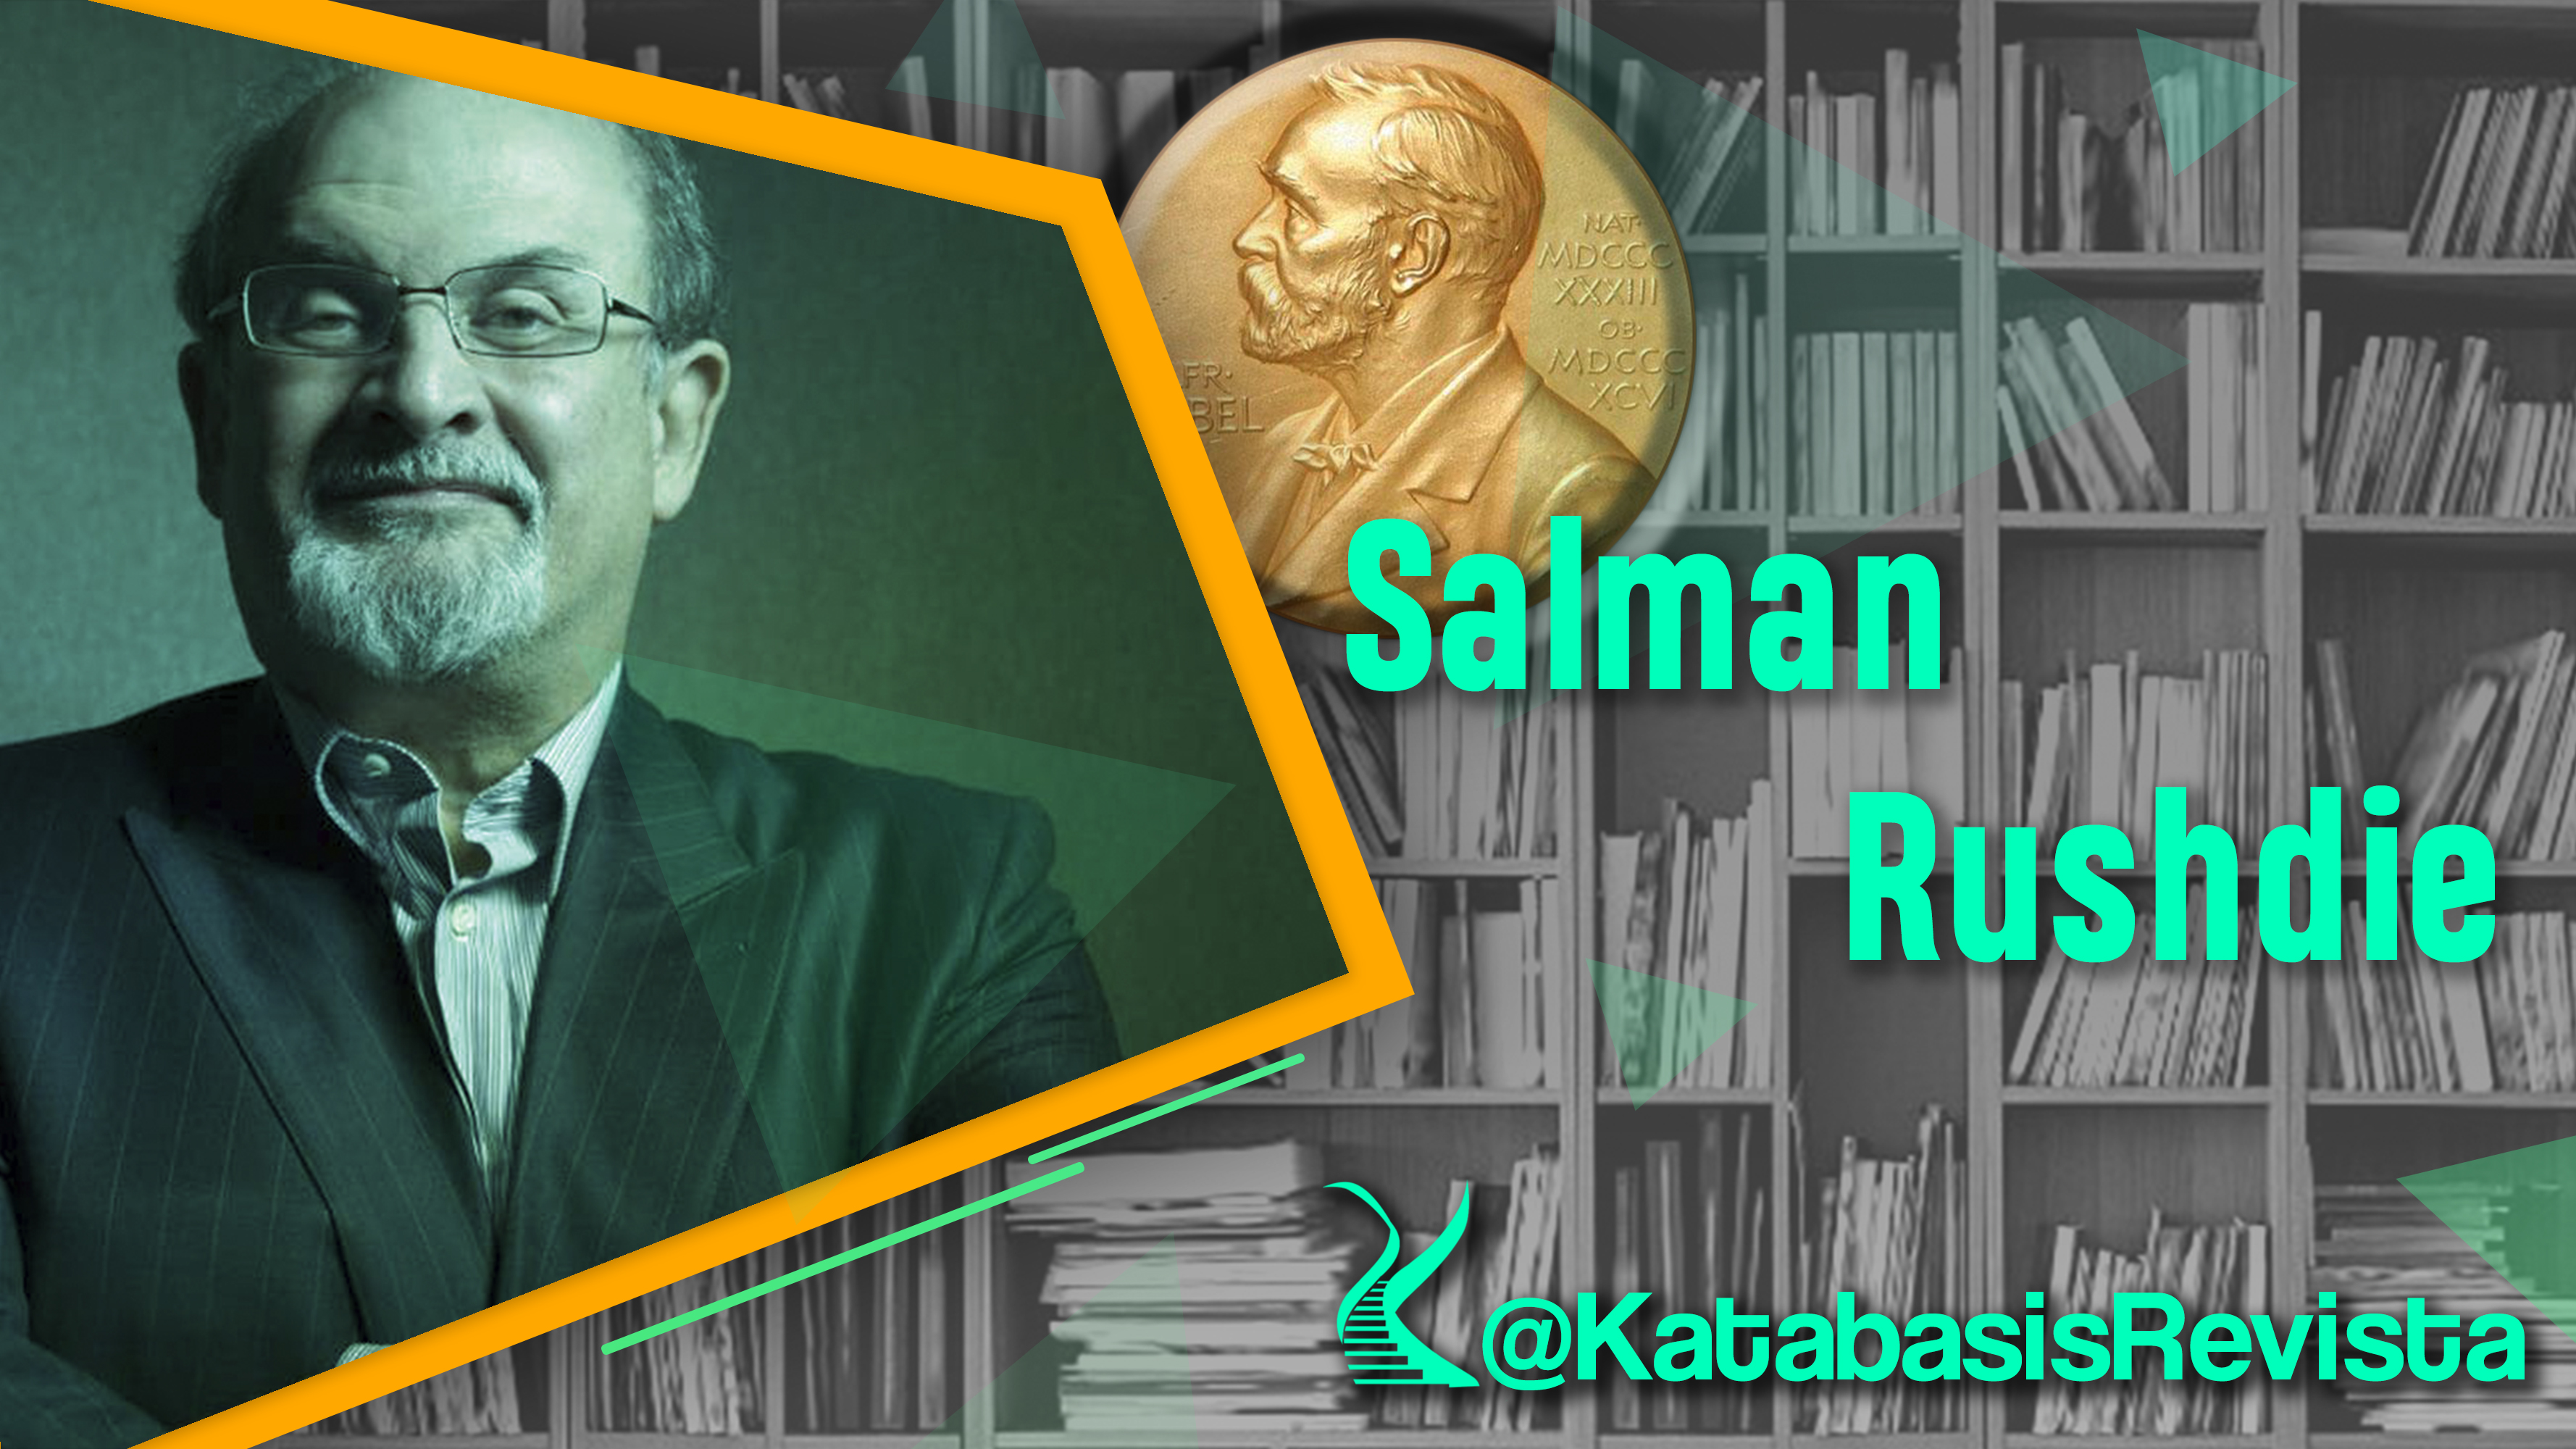 De Camino al Nobel |Salman Rushdie